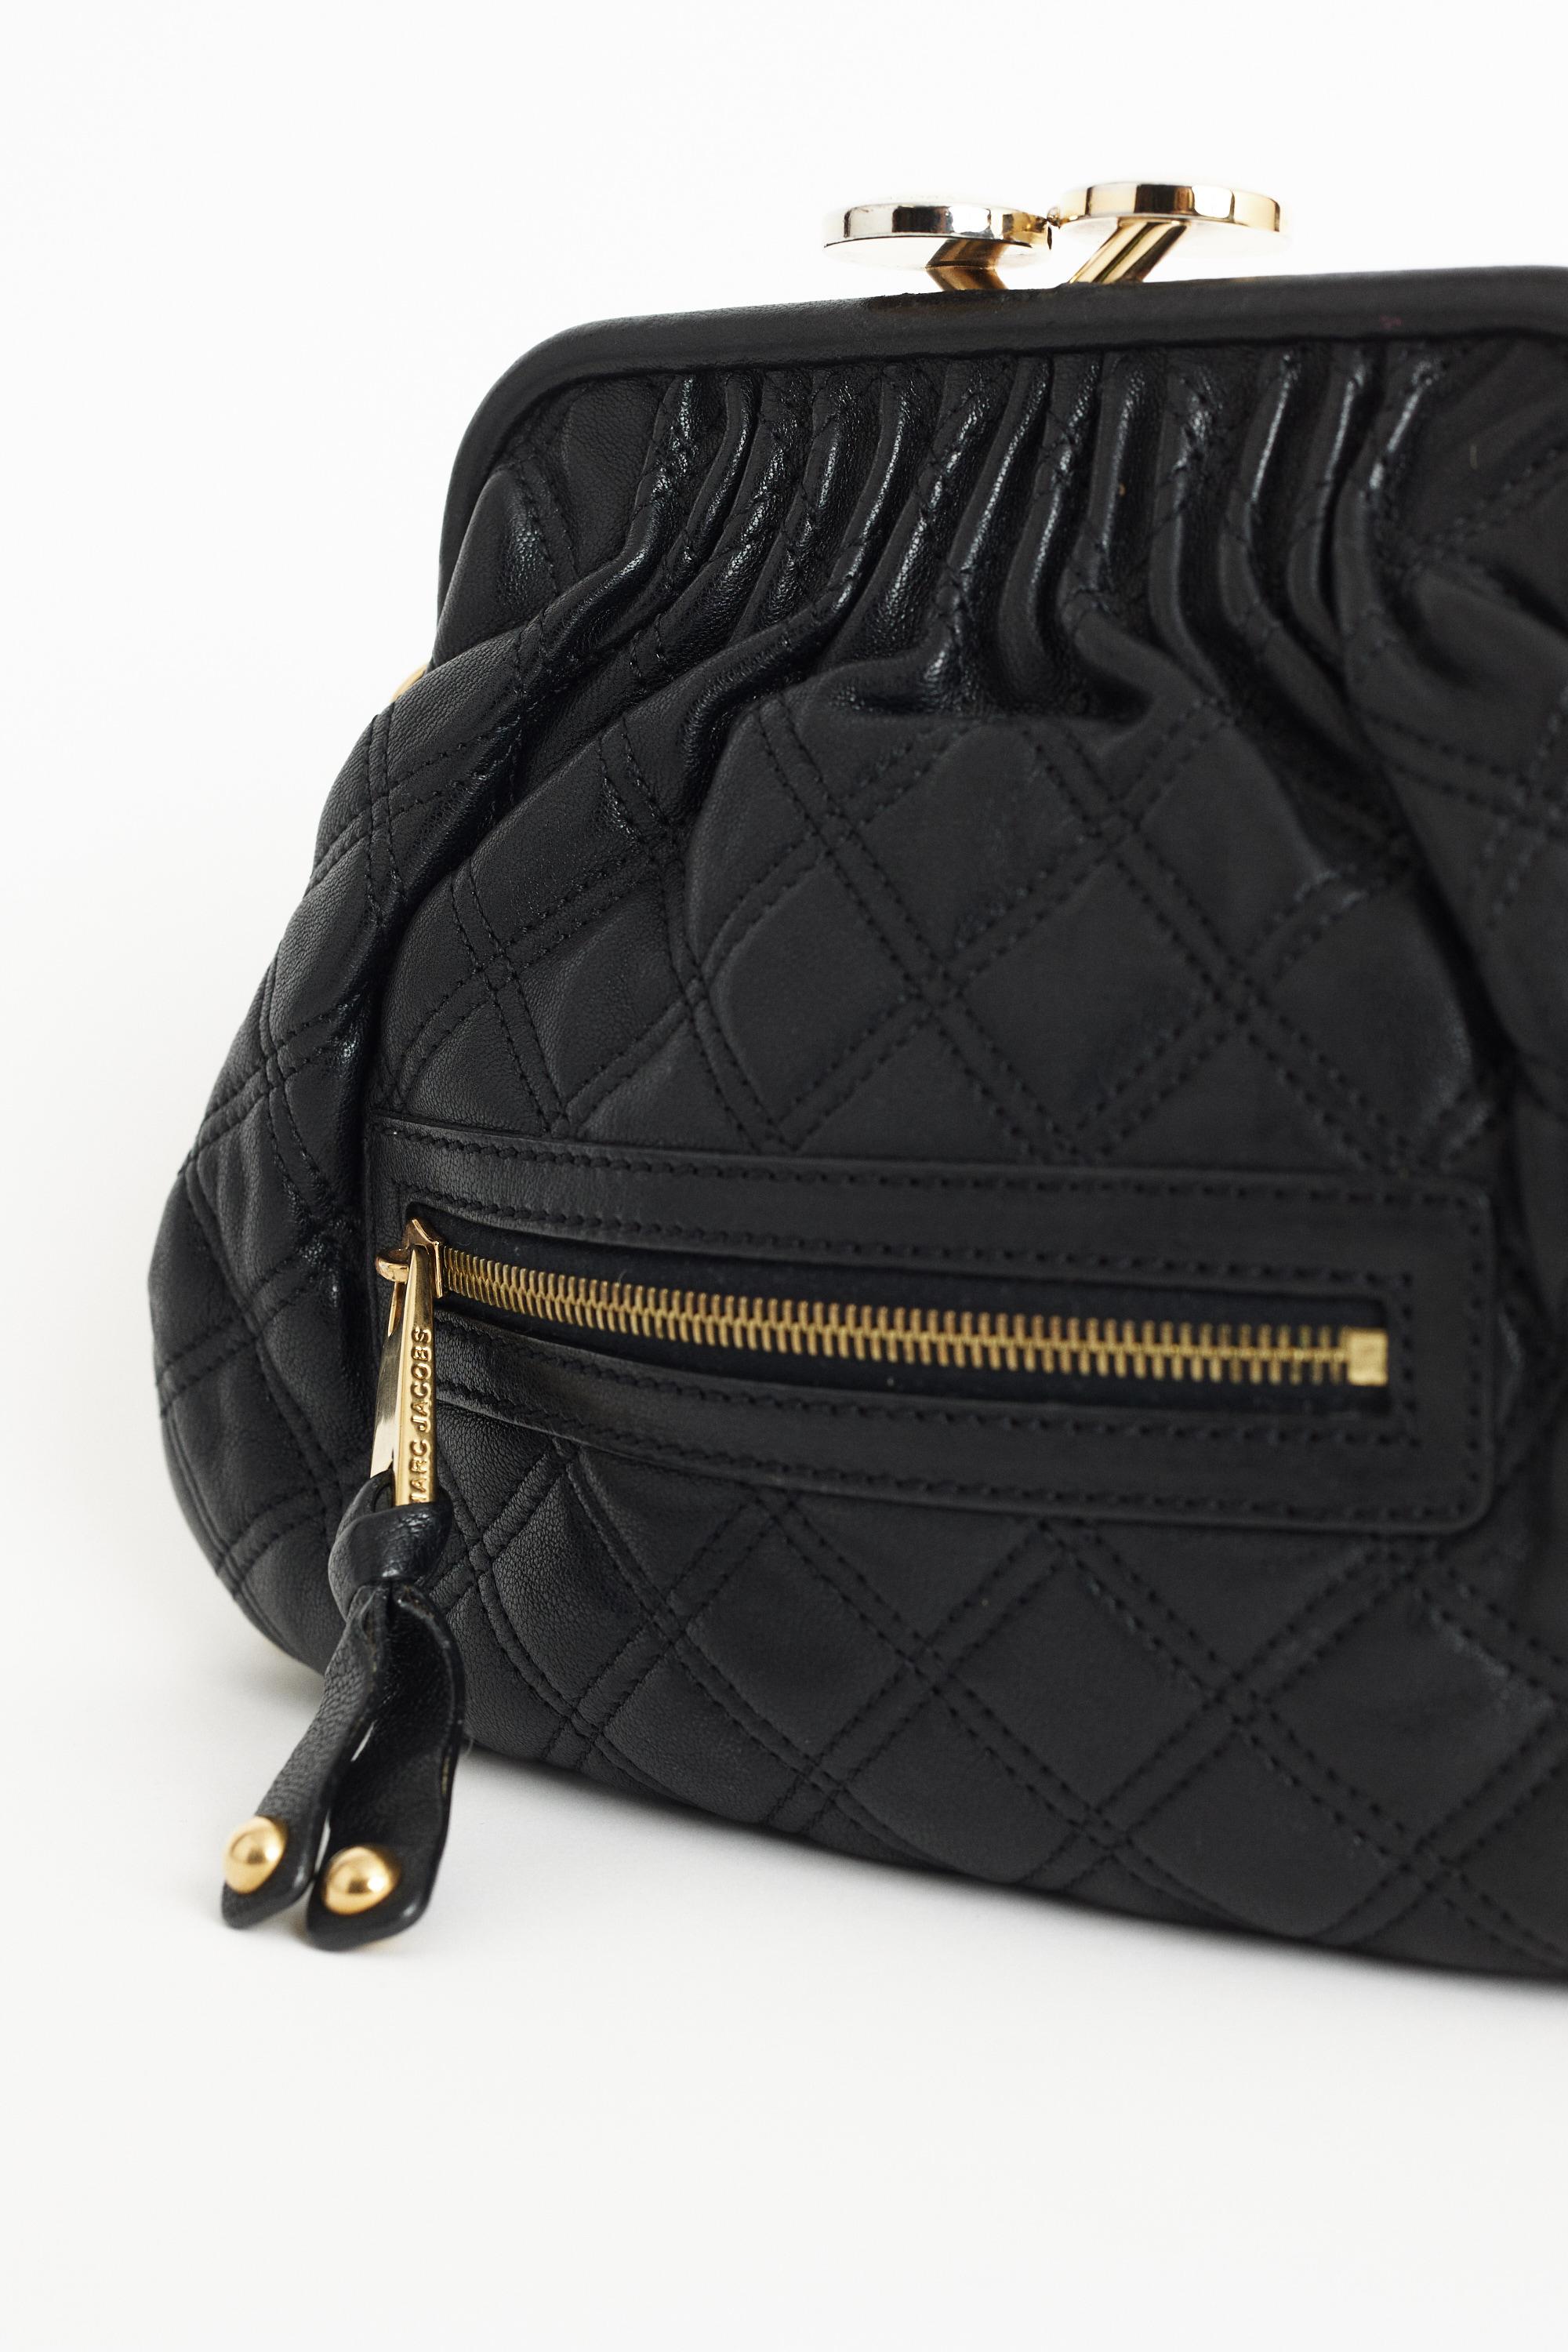 Black Marc Jacobs 2009 Stam Purse Bag For Sale